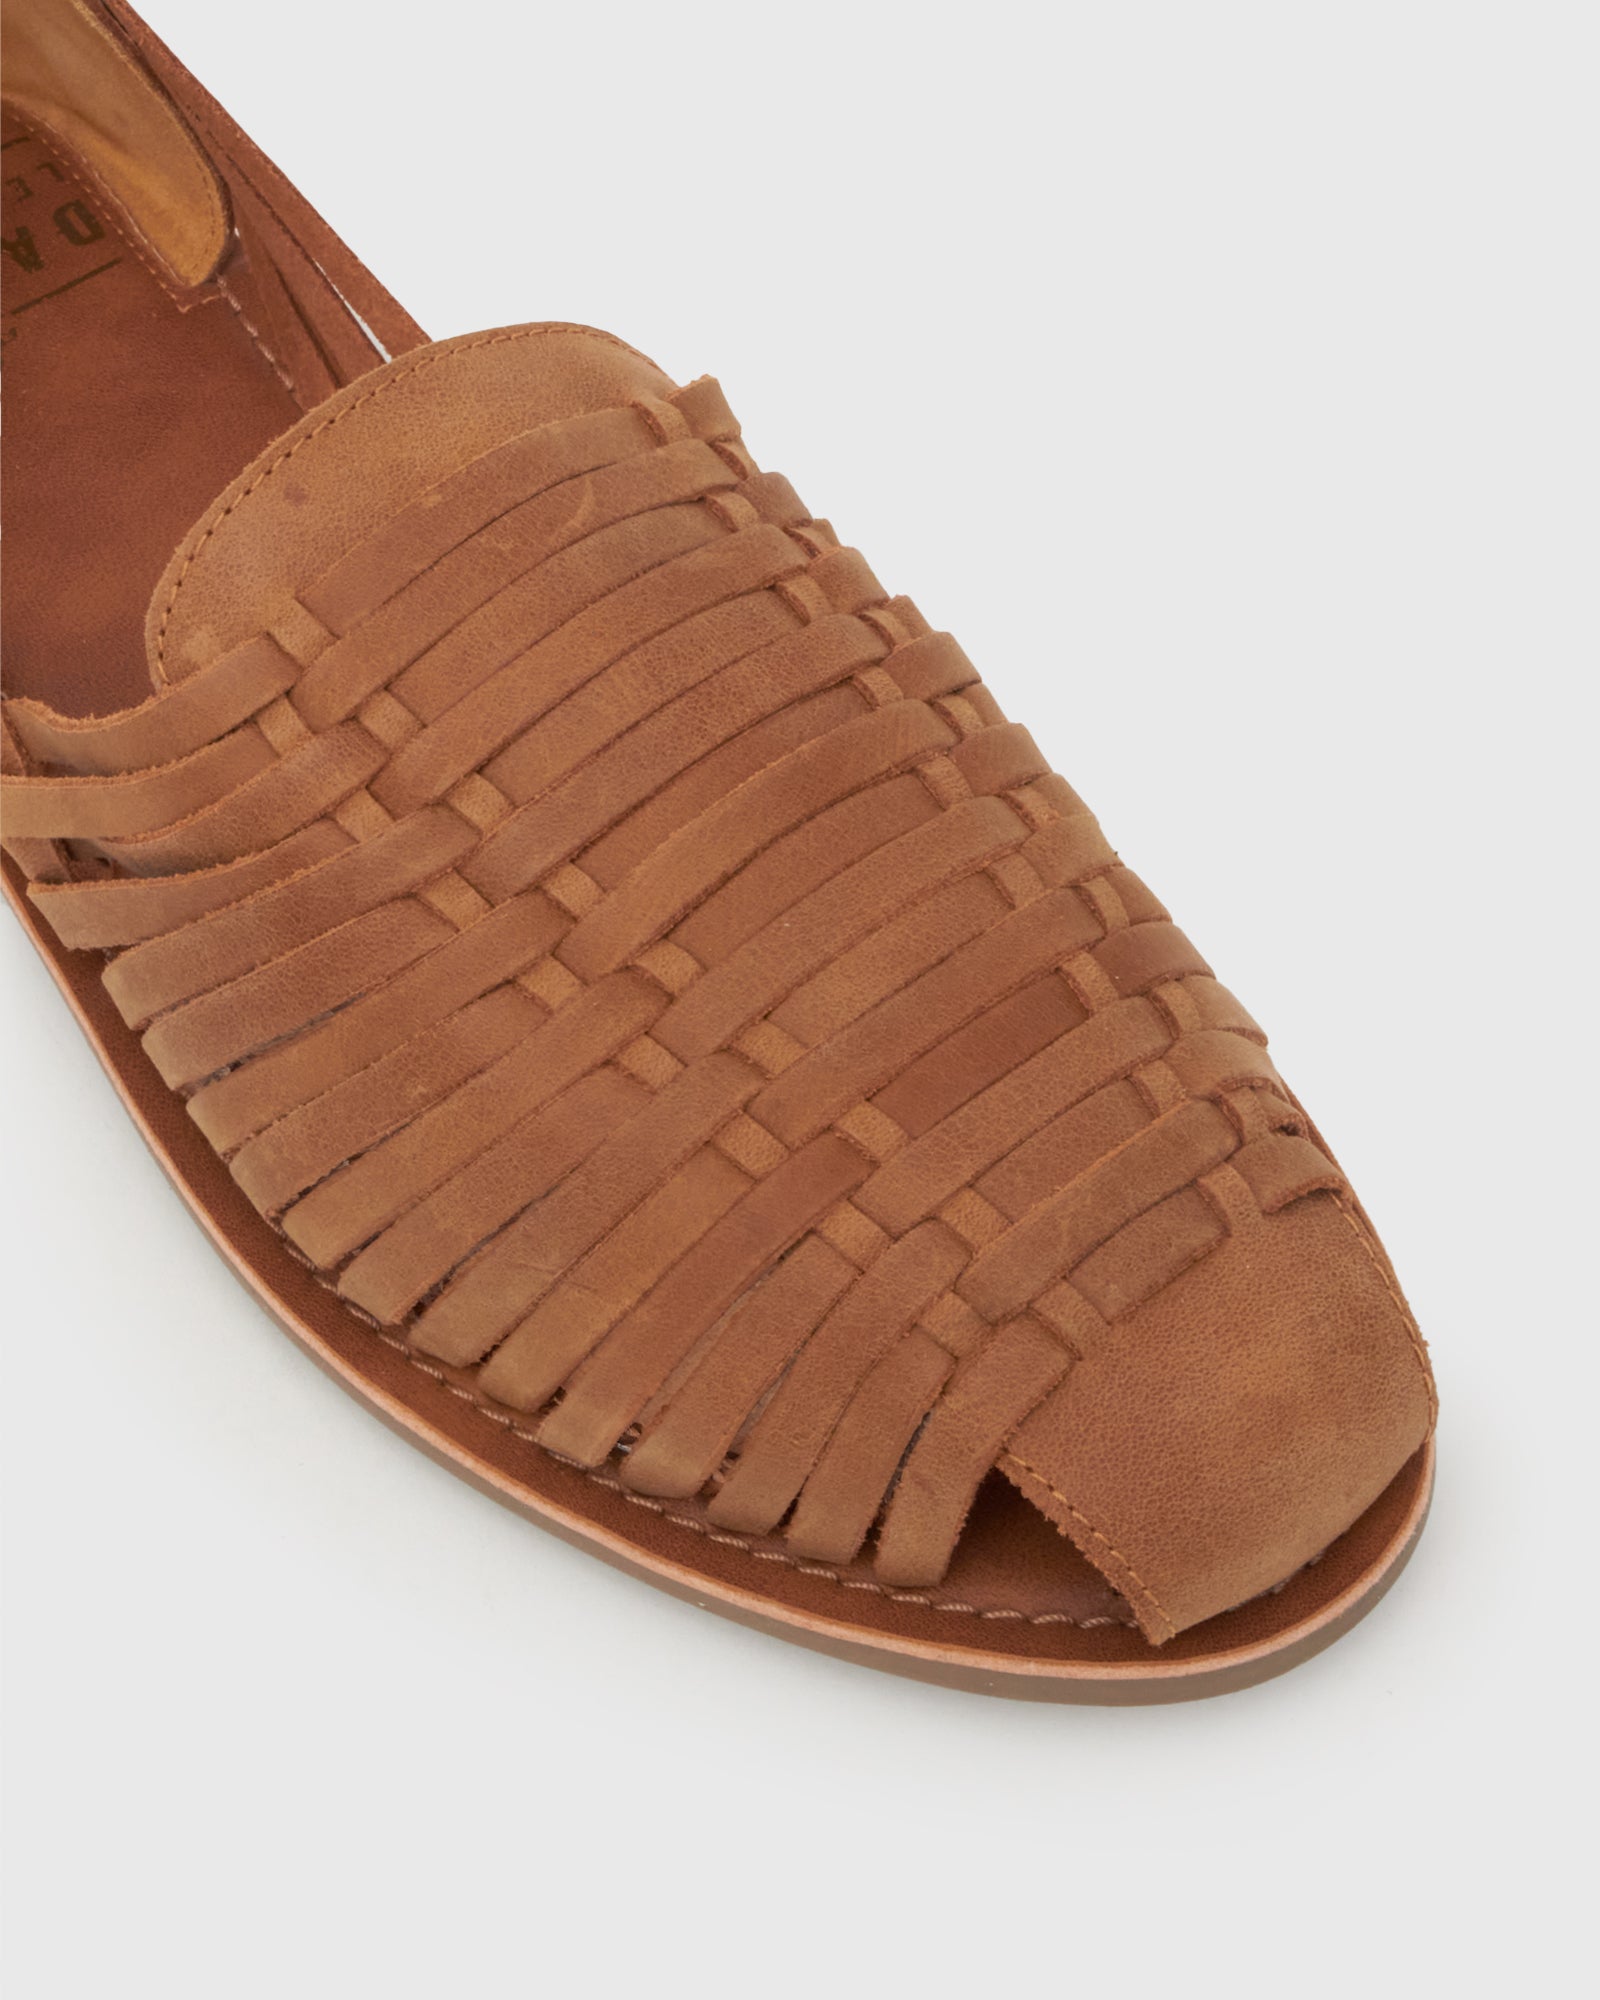 11 Best Huarache Sandals 2023 Woven SlipOns From Nisolo Chamula and  Yuketen  GQ